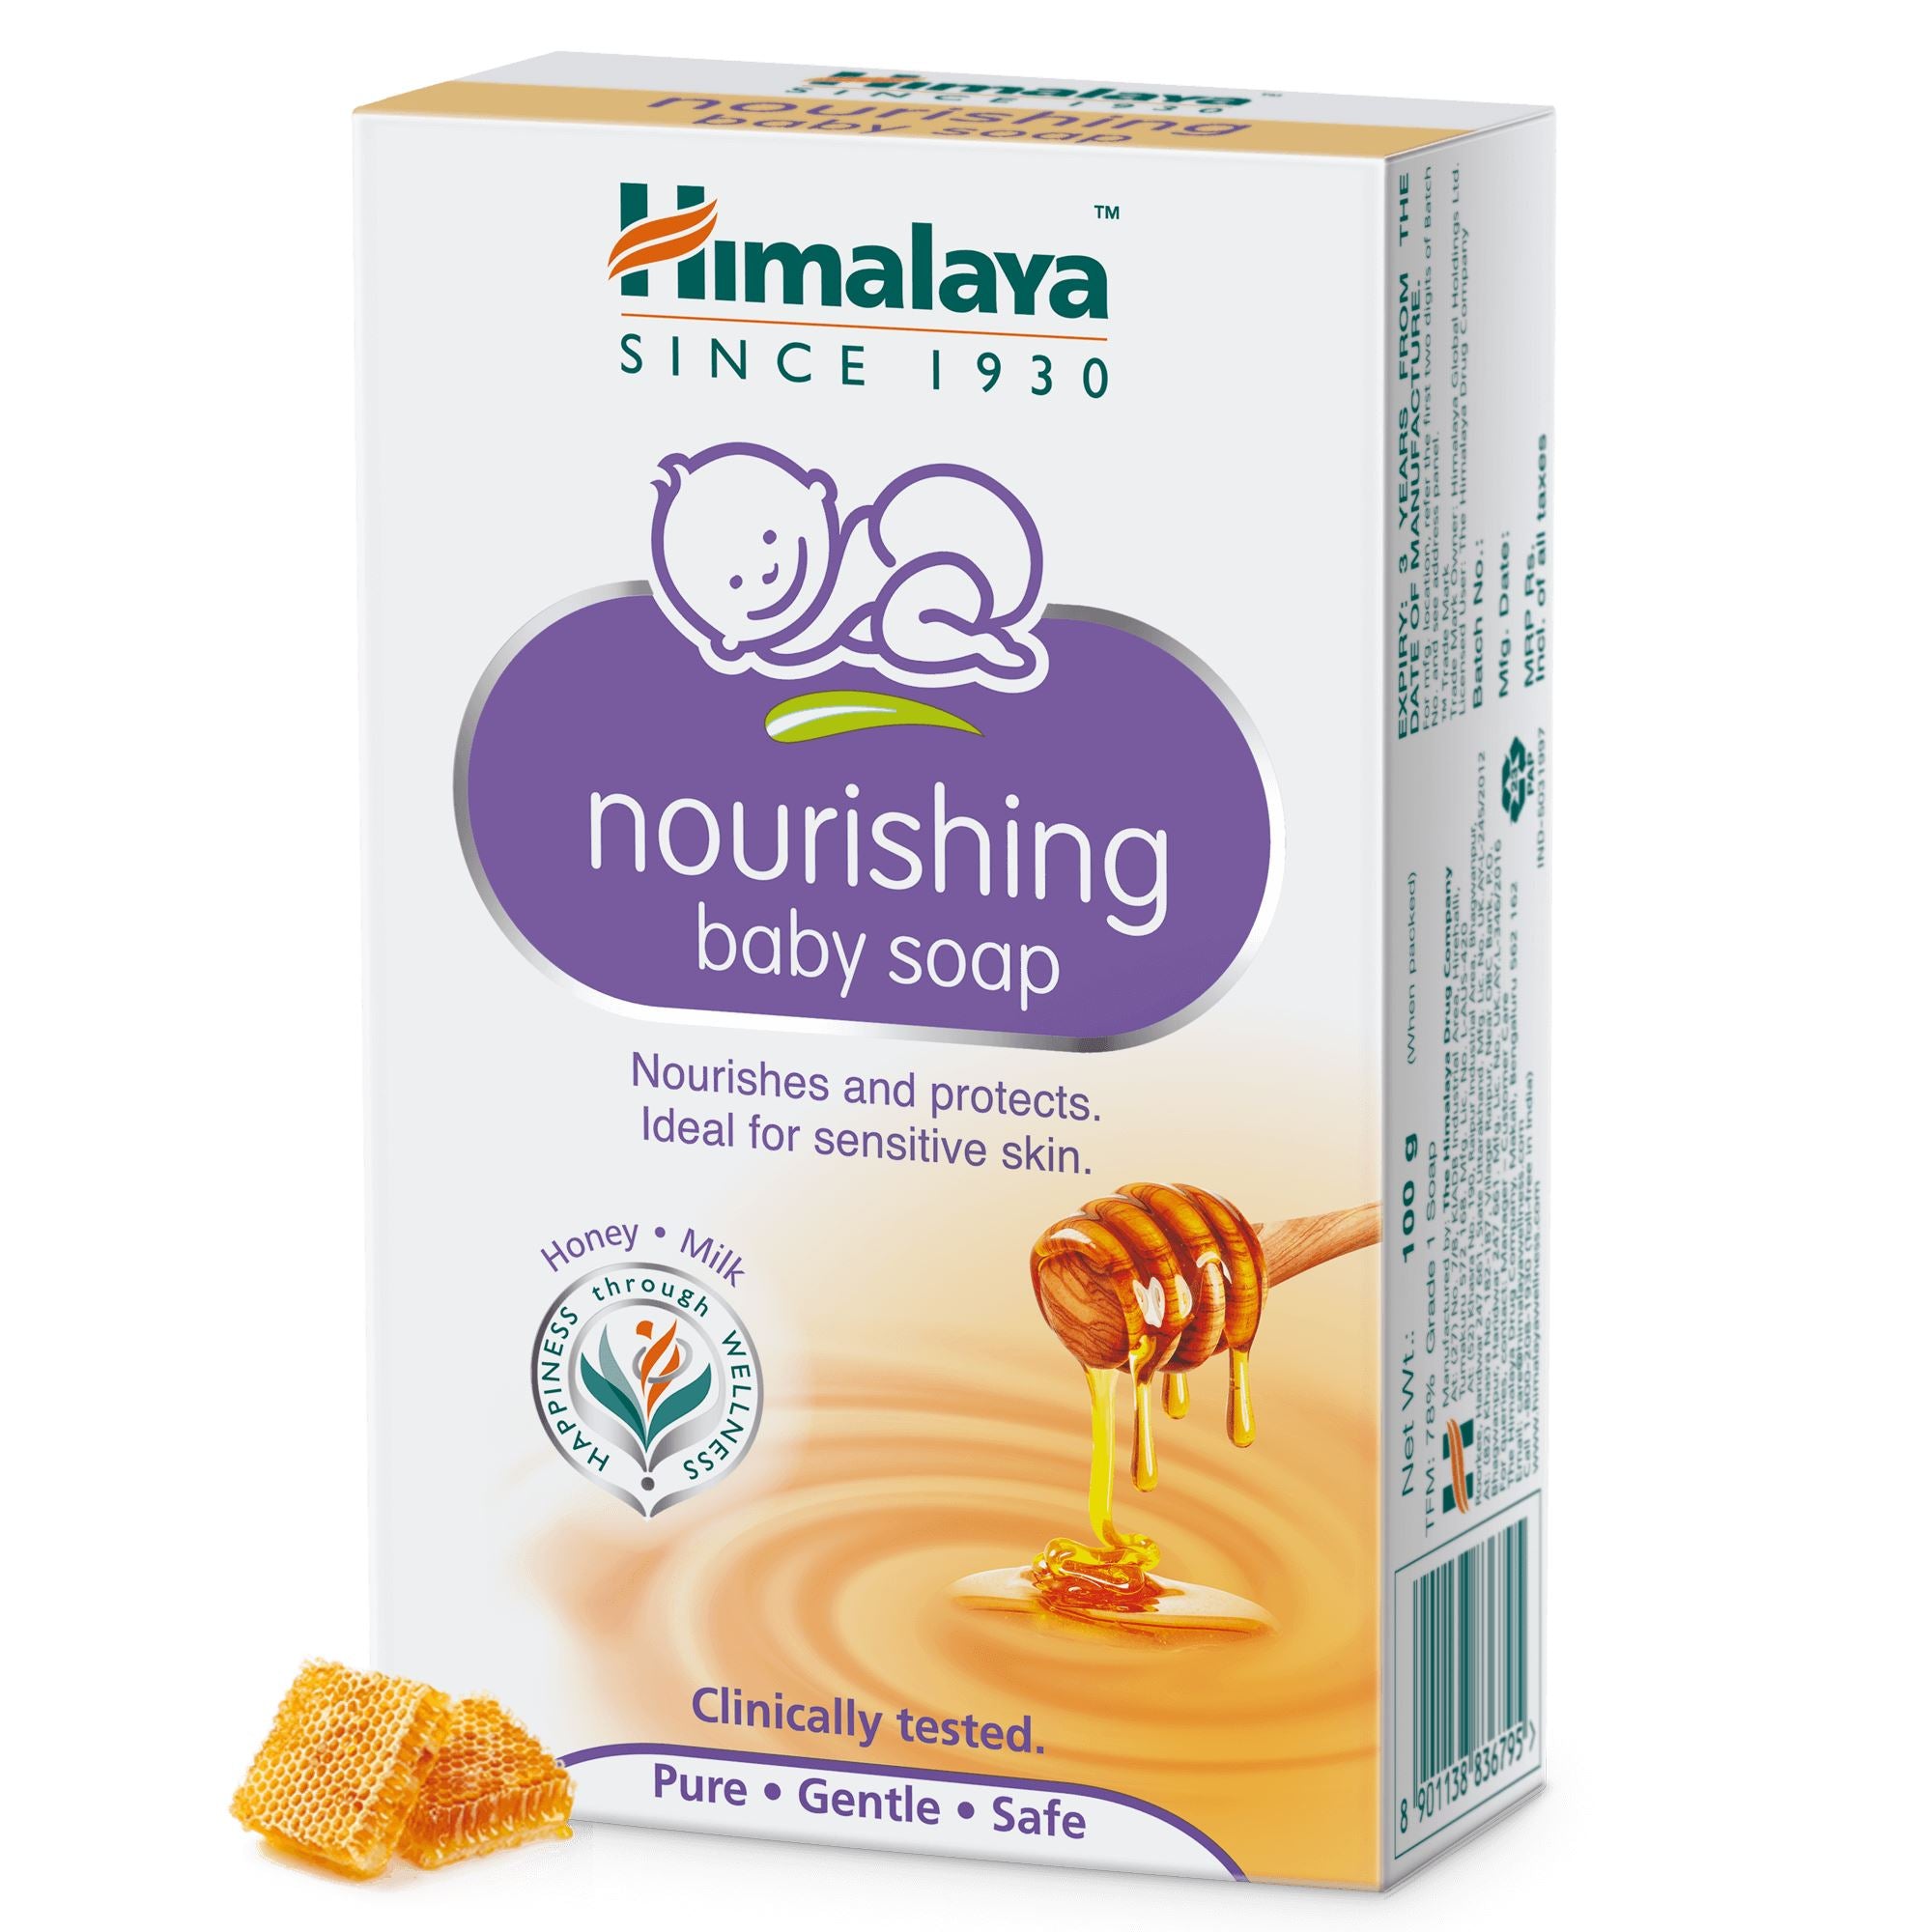 Himalaya Nourishing baby soap 100g - Gentle nourishment for baby's sensitive skin